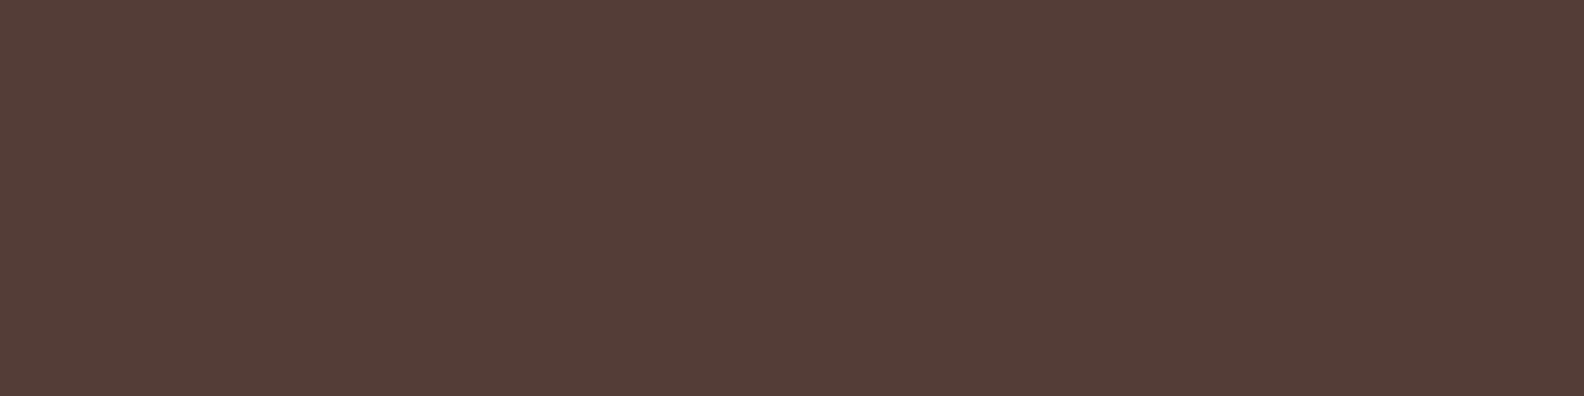 1584x396 Dark Liver Horses Solid Color Background